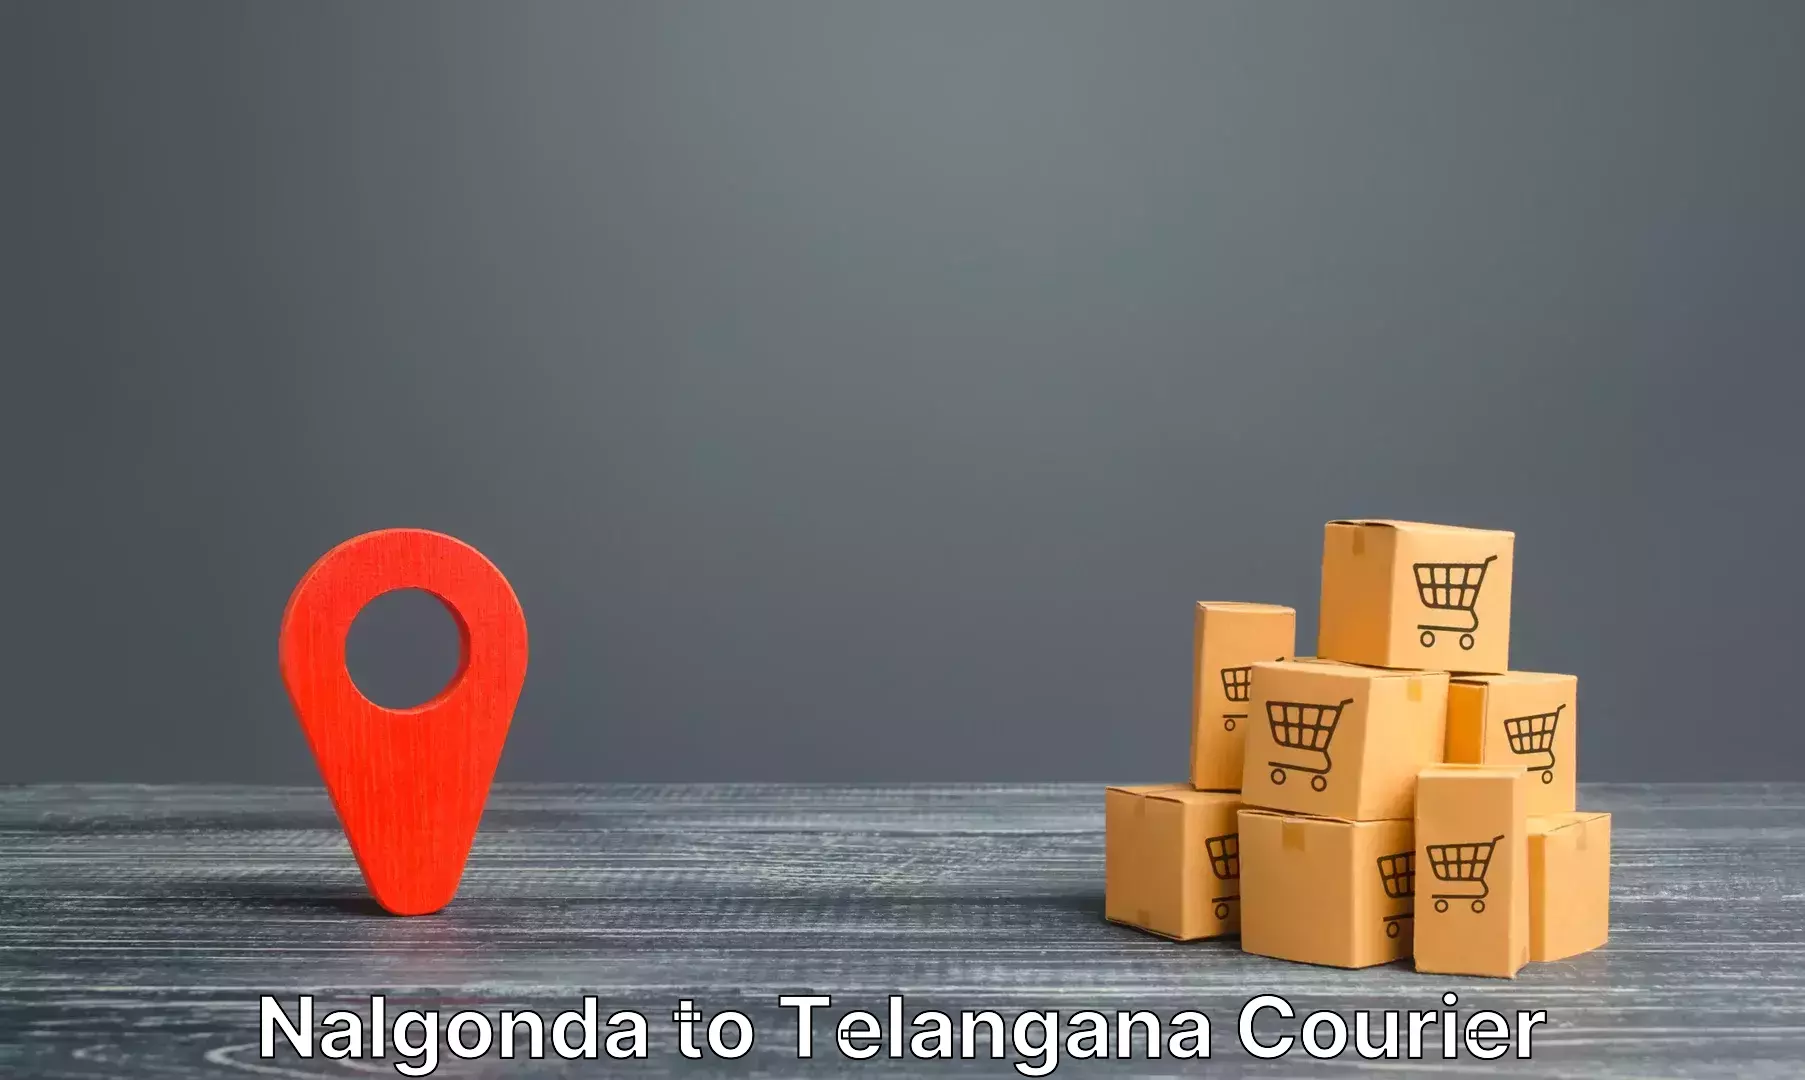 Luggage delivery app Nalgonda to Zahirabad